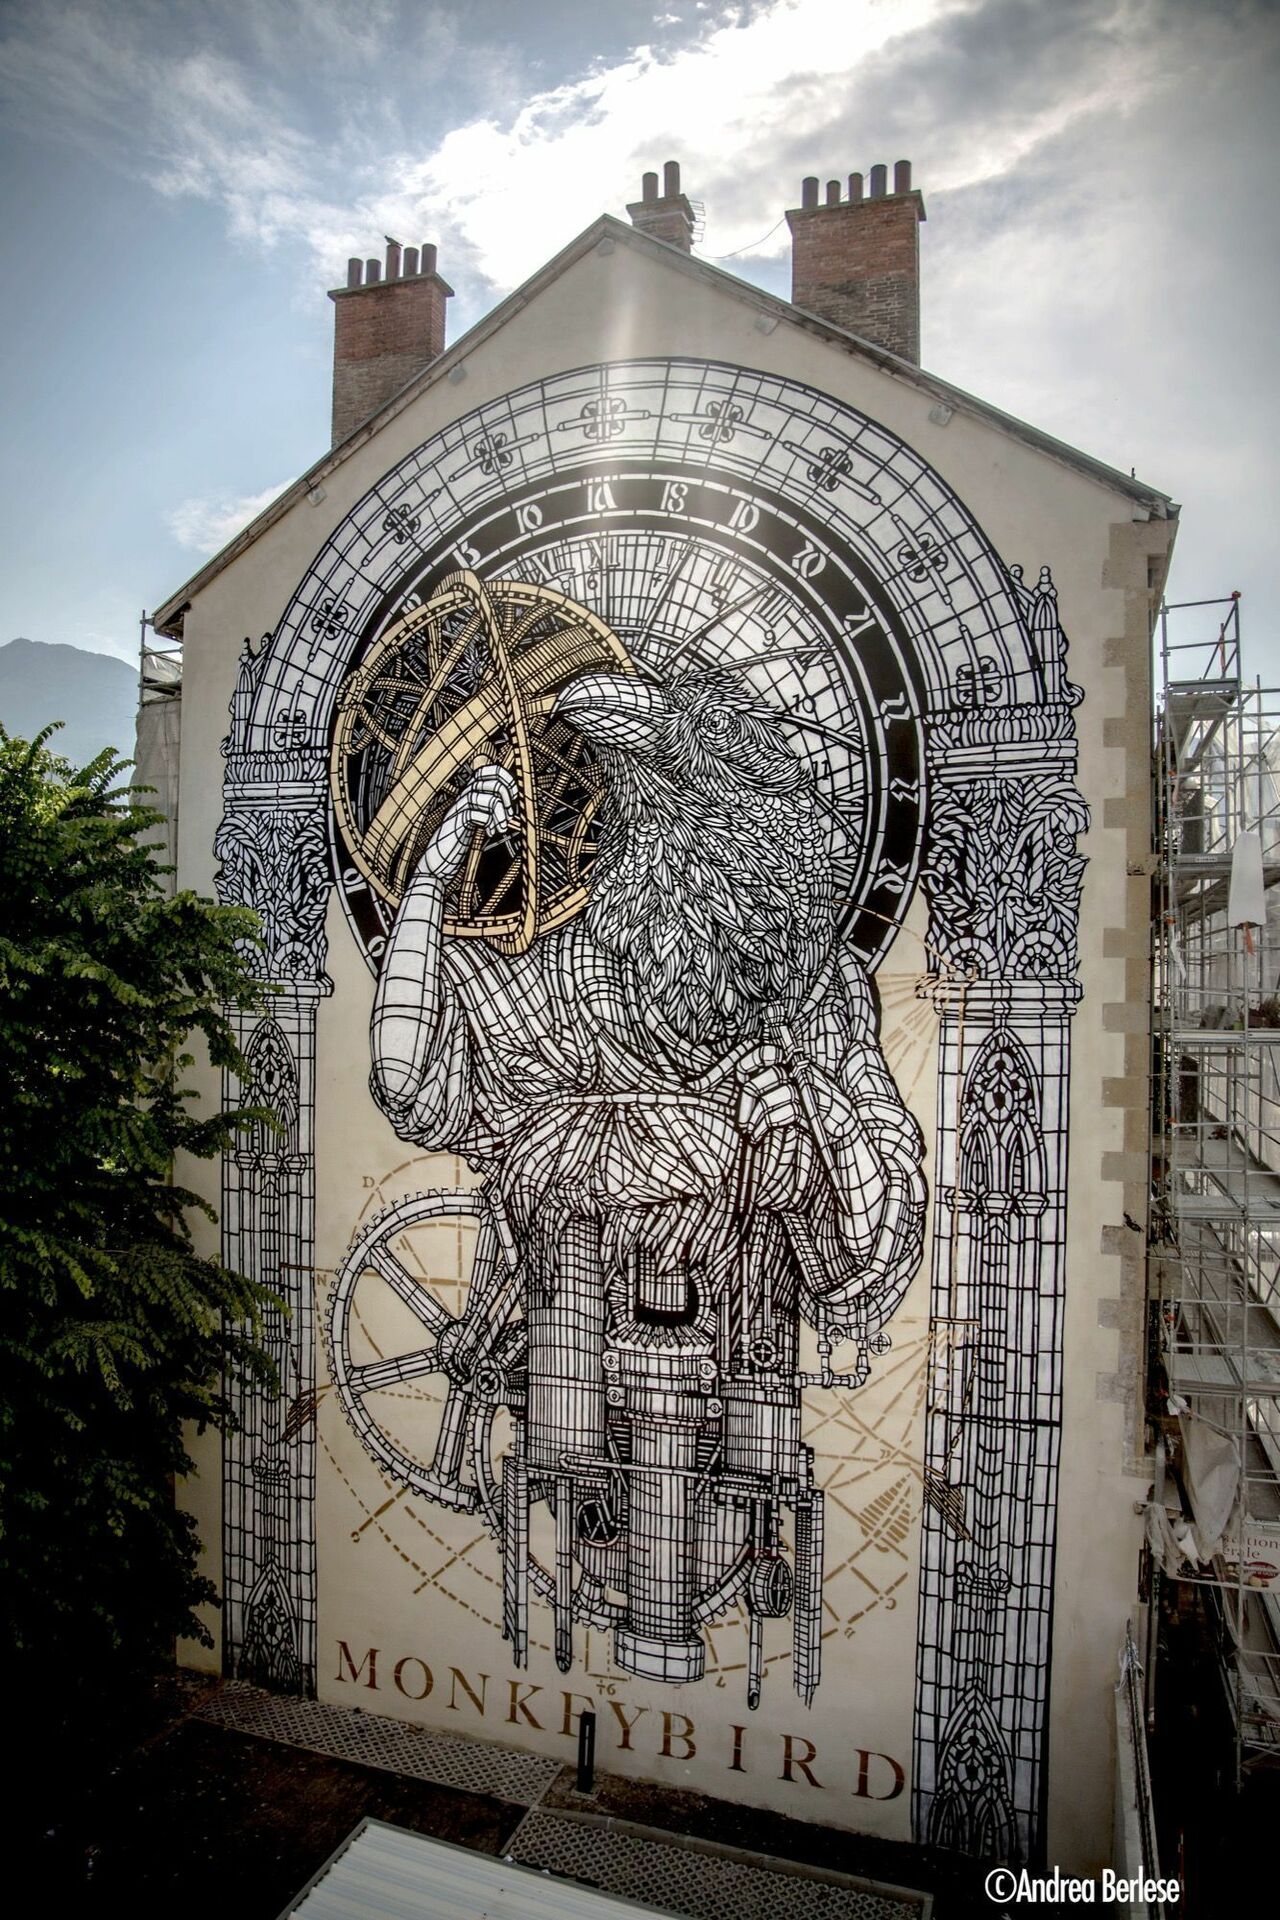 Monkeybird in Grenoble, France#streetart #mural #graffiti #art https://t.co/7zwTeFZzxs